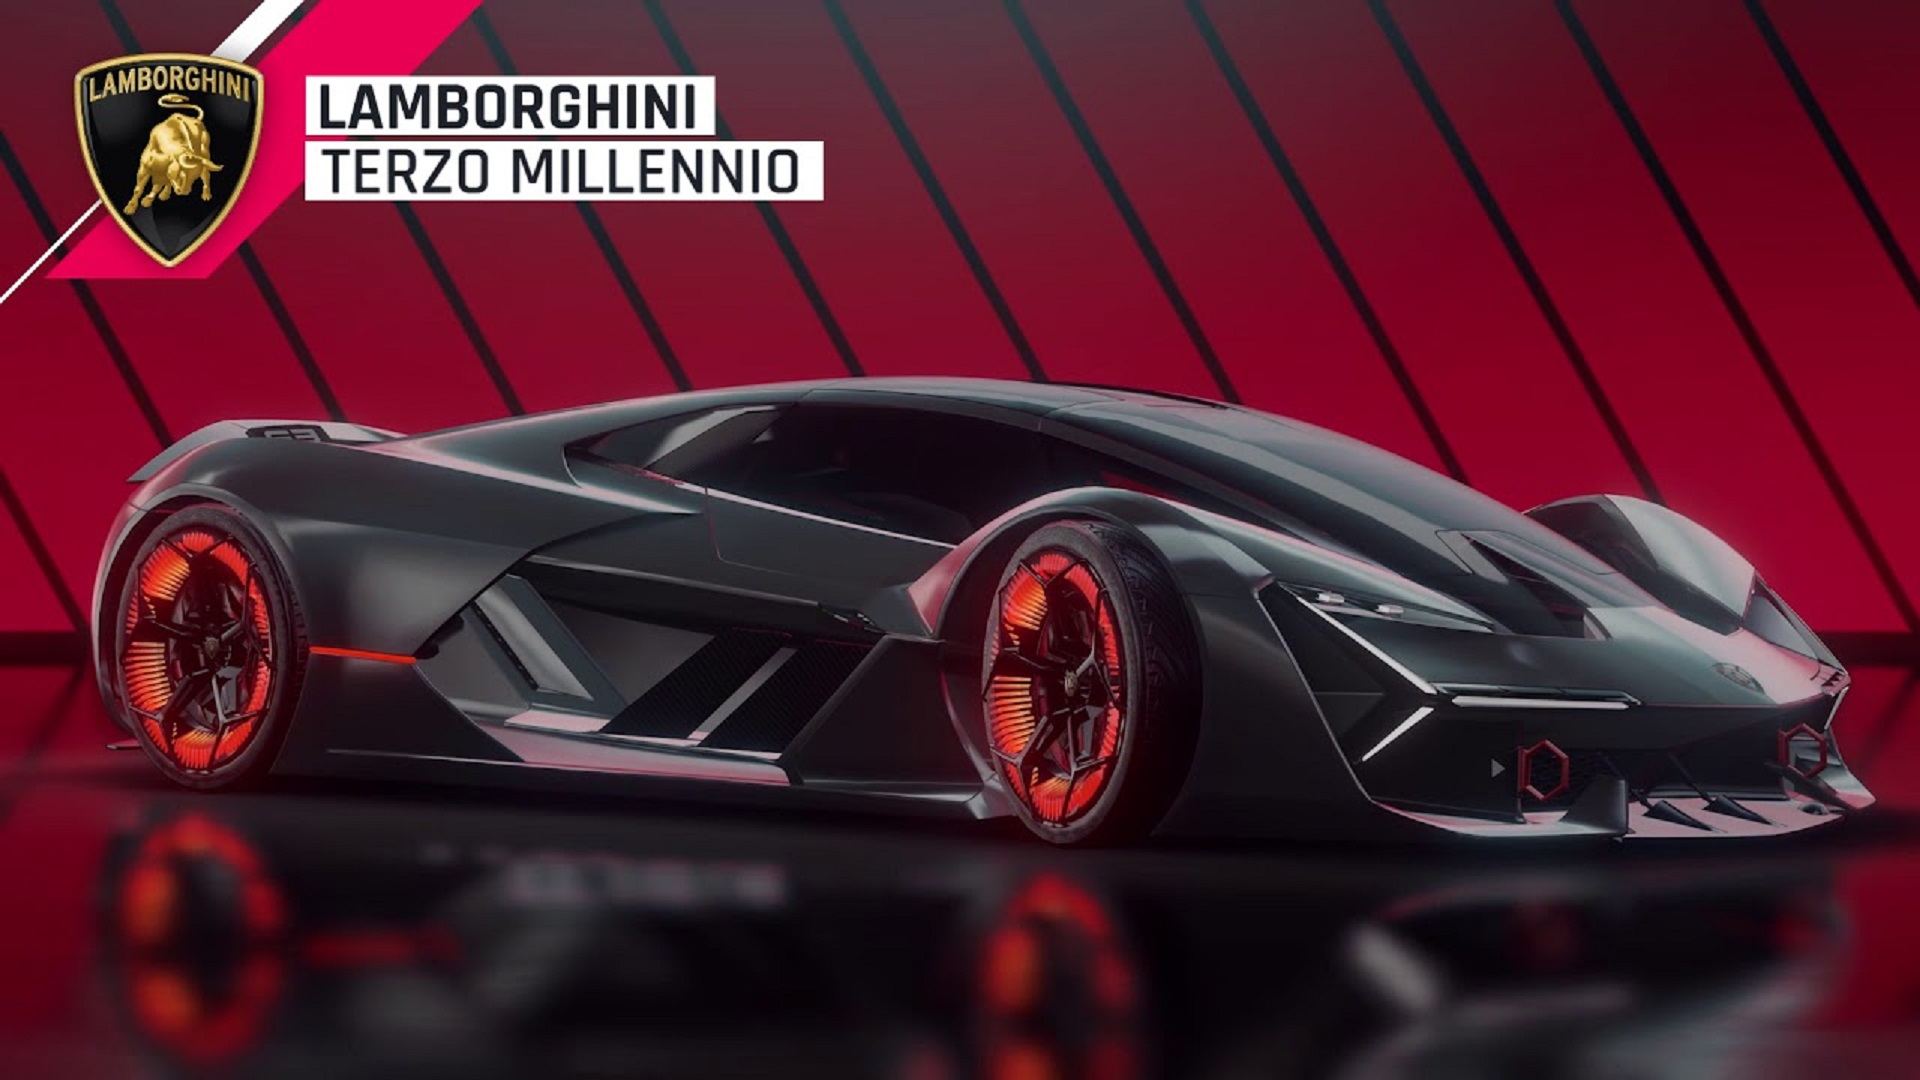 Vehicles Lamborghini Terzo Millennio 4k Ultra HD Wallpaper